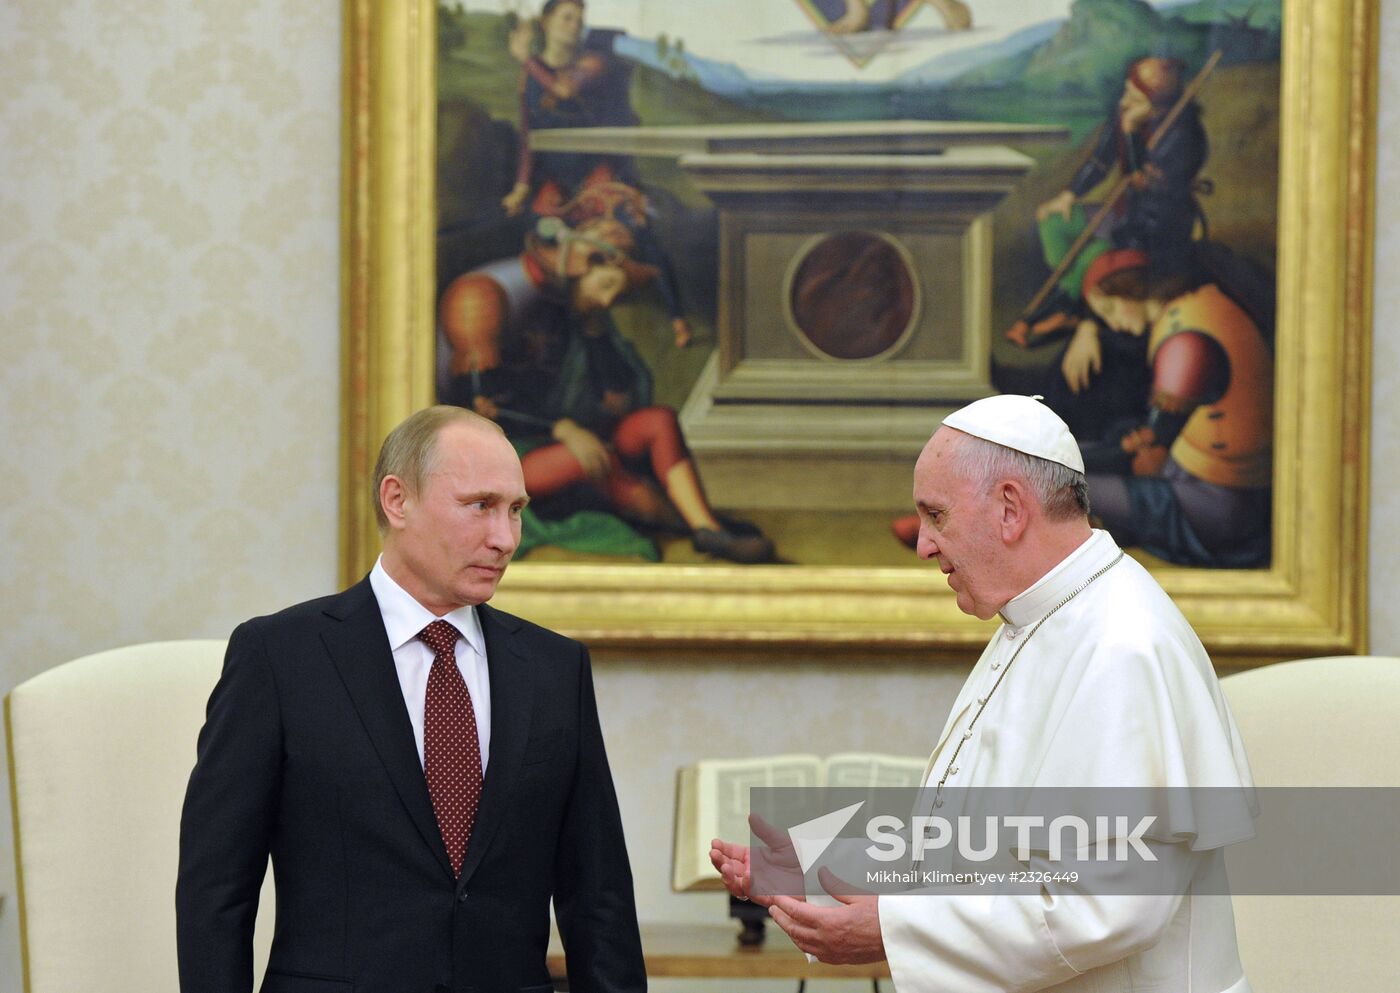 Vladimir Putin visits the Vatican